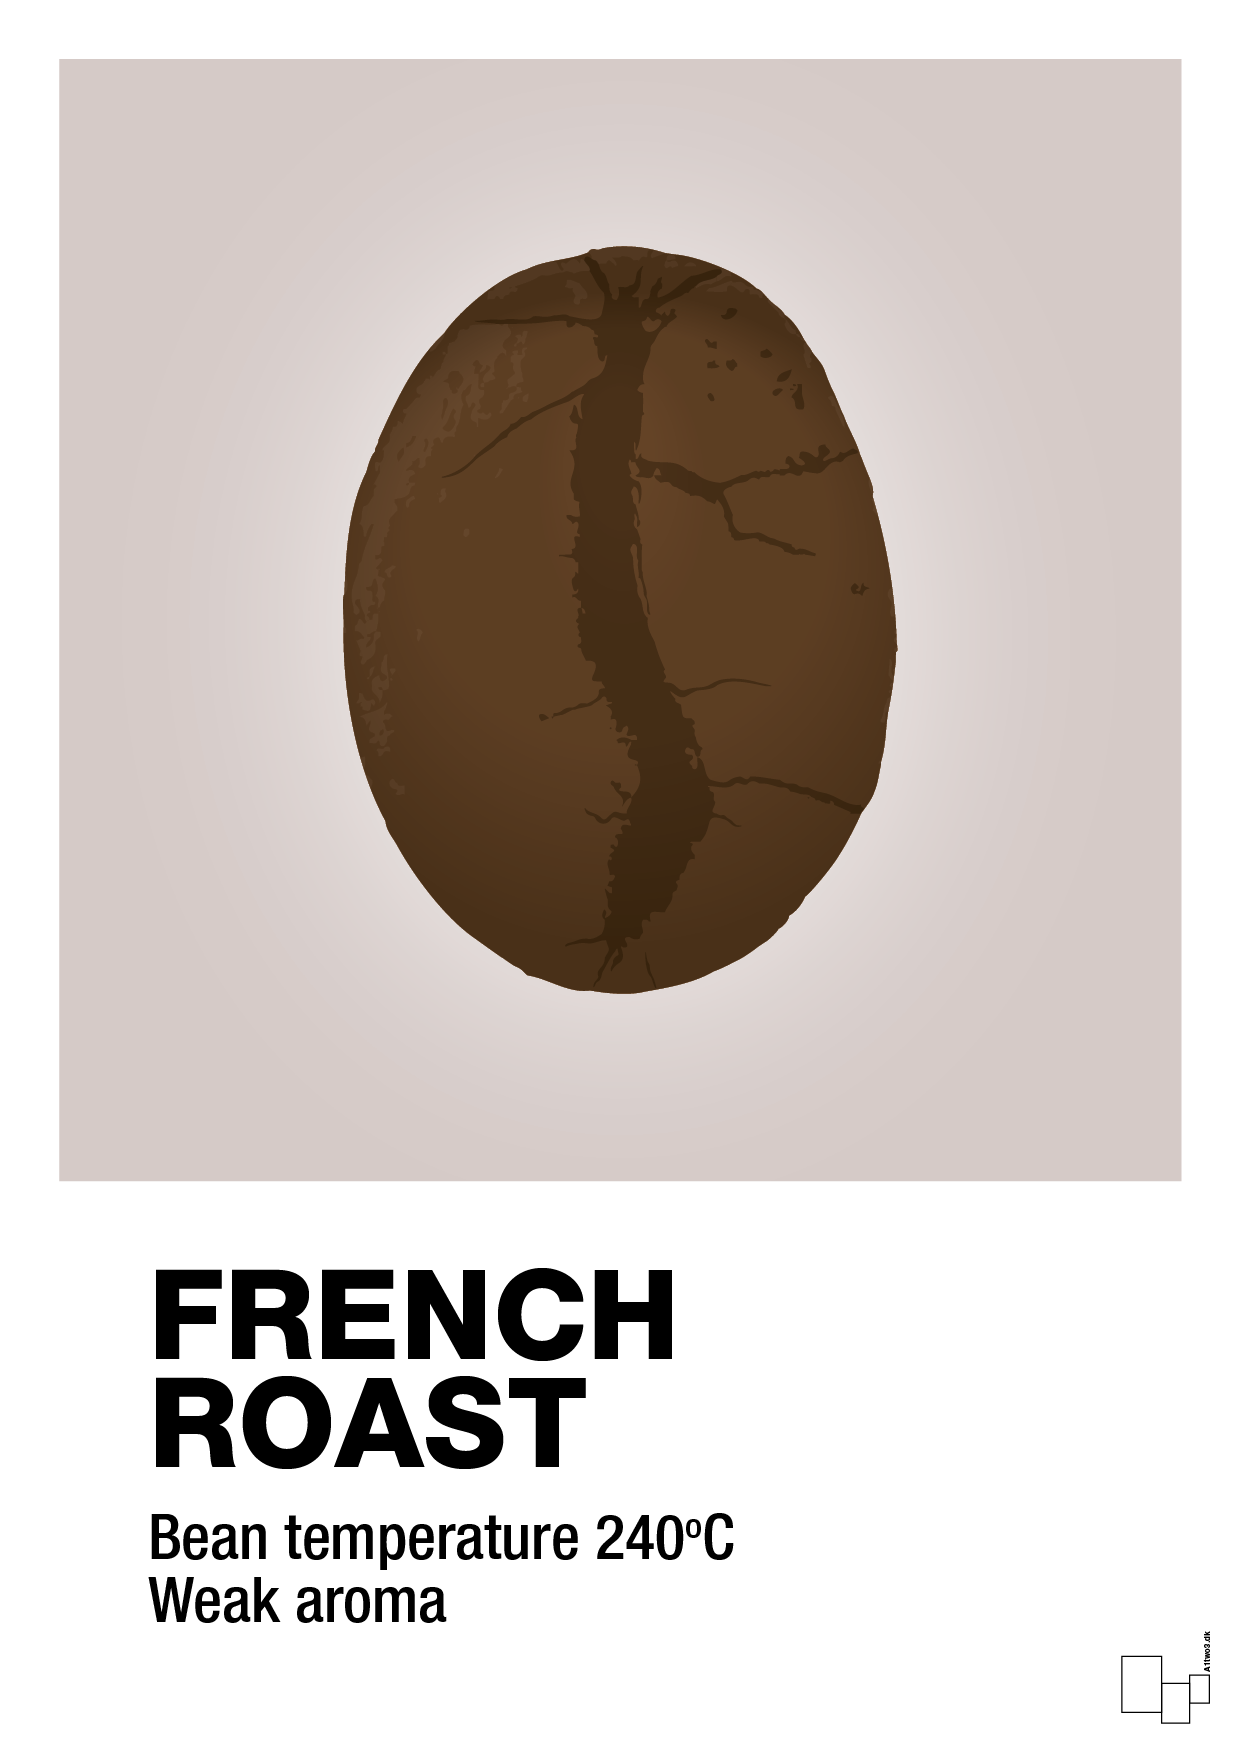 french roast - Plakat med Mad & Drikke i Broken Beige